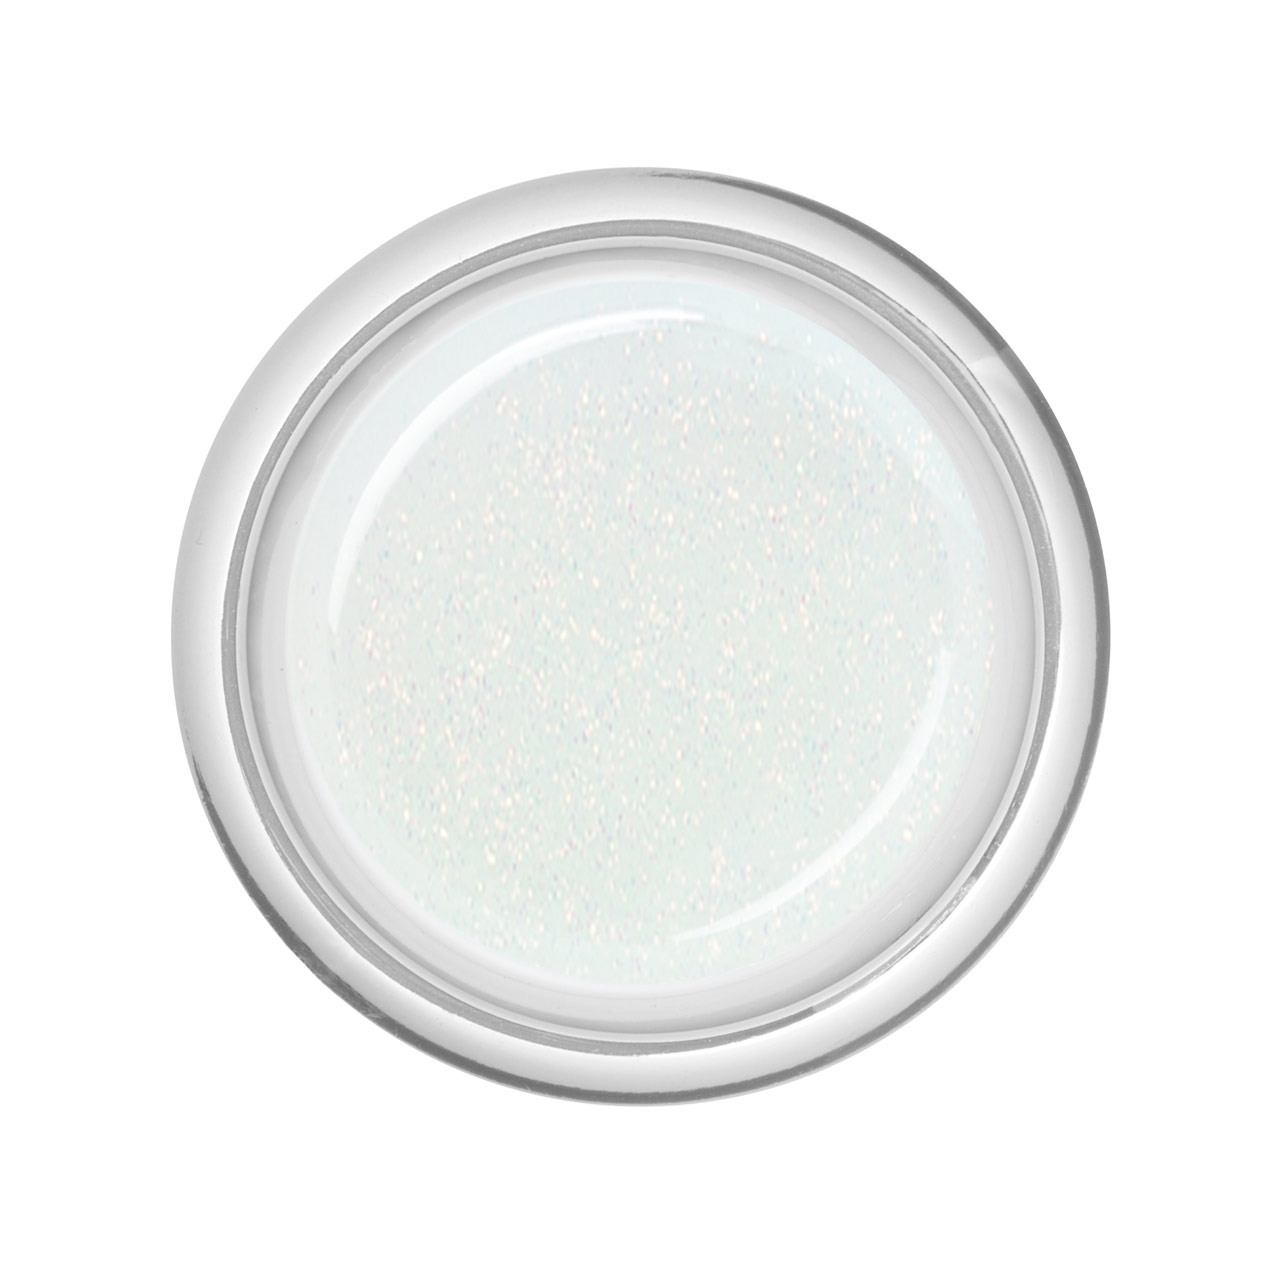 BAEHR BEAUTY CONCEPT - NAILS Effekt-Gel Shimmerize Diamond 15 ml